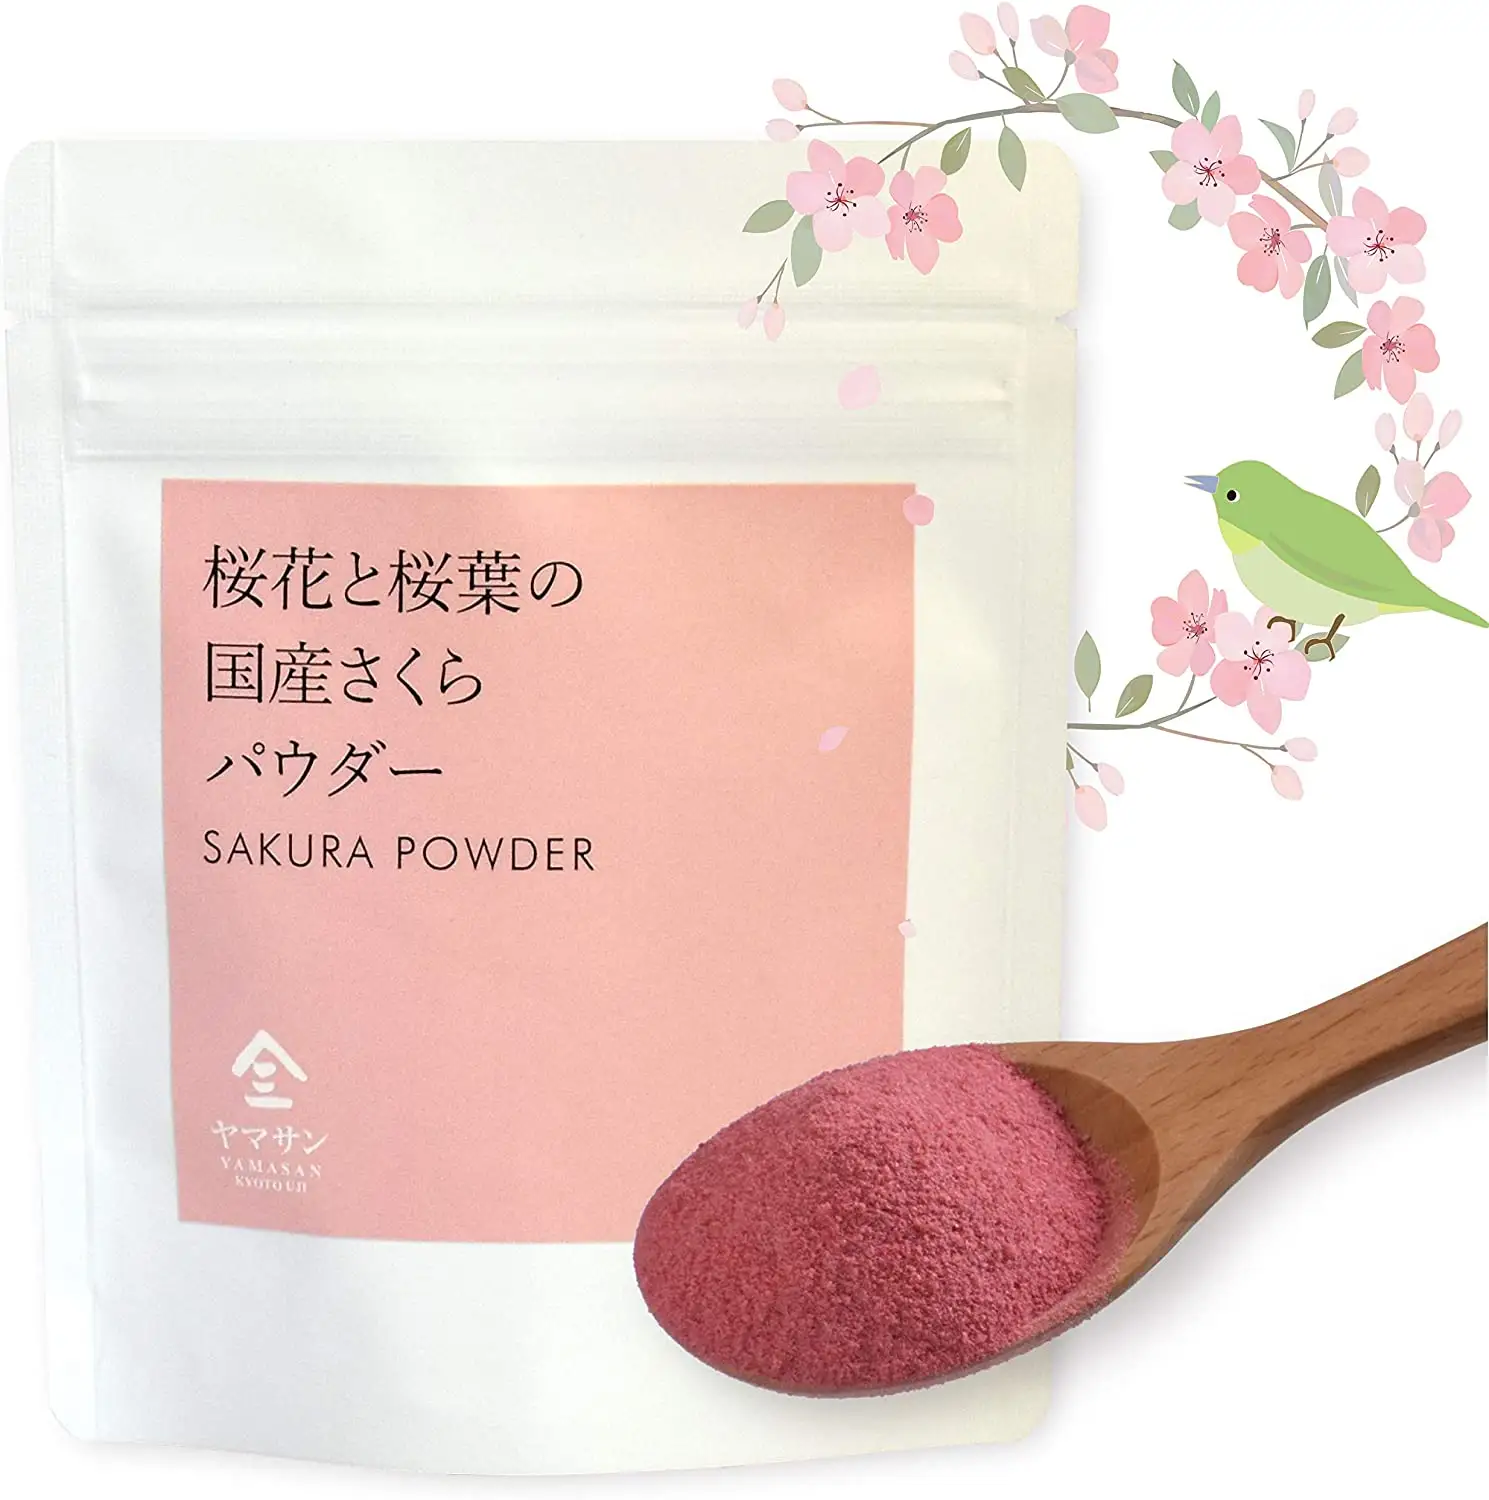 Sakura powder  Sakura flavor   Aromatic  using Japanese cherry blossom